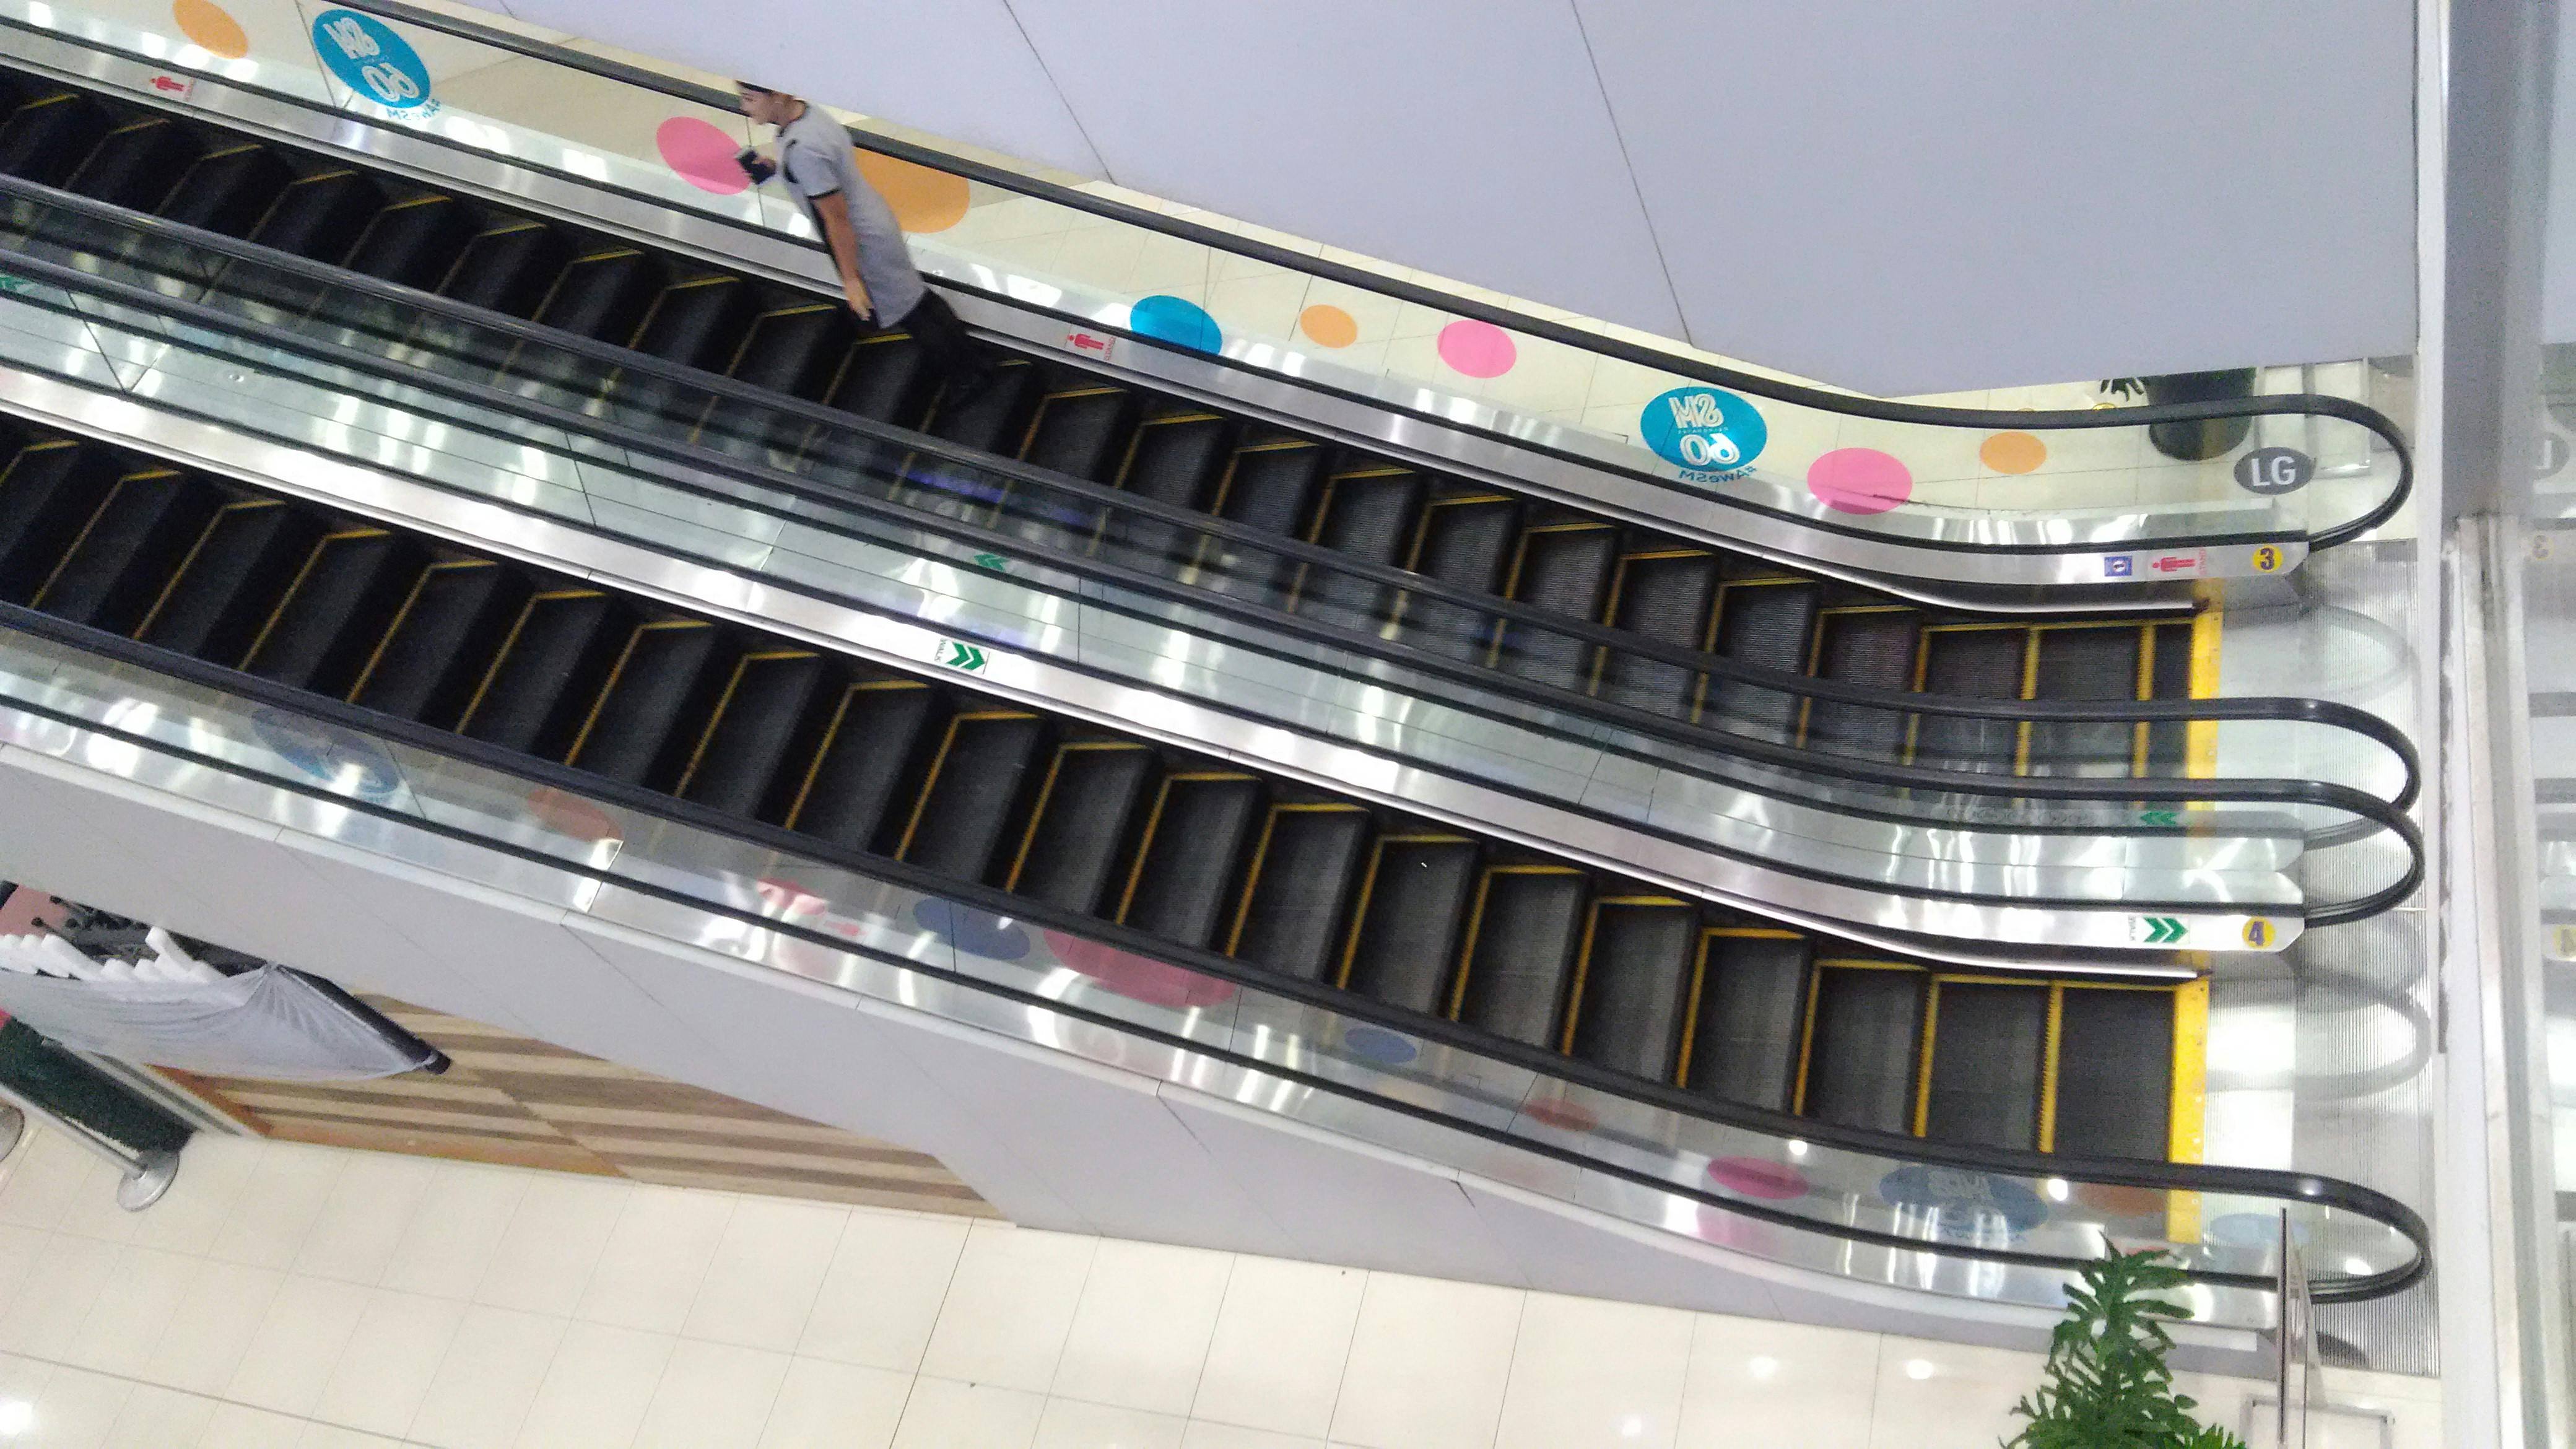 Free stock photo of escalators, Shopping Mall